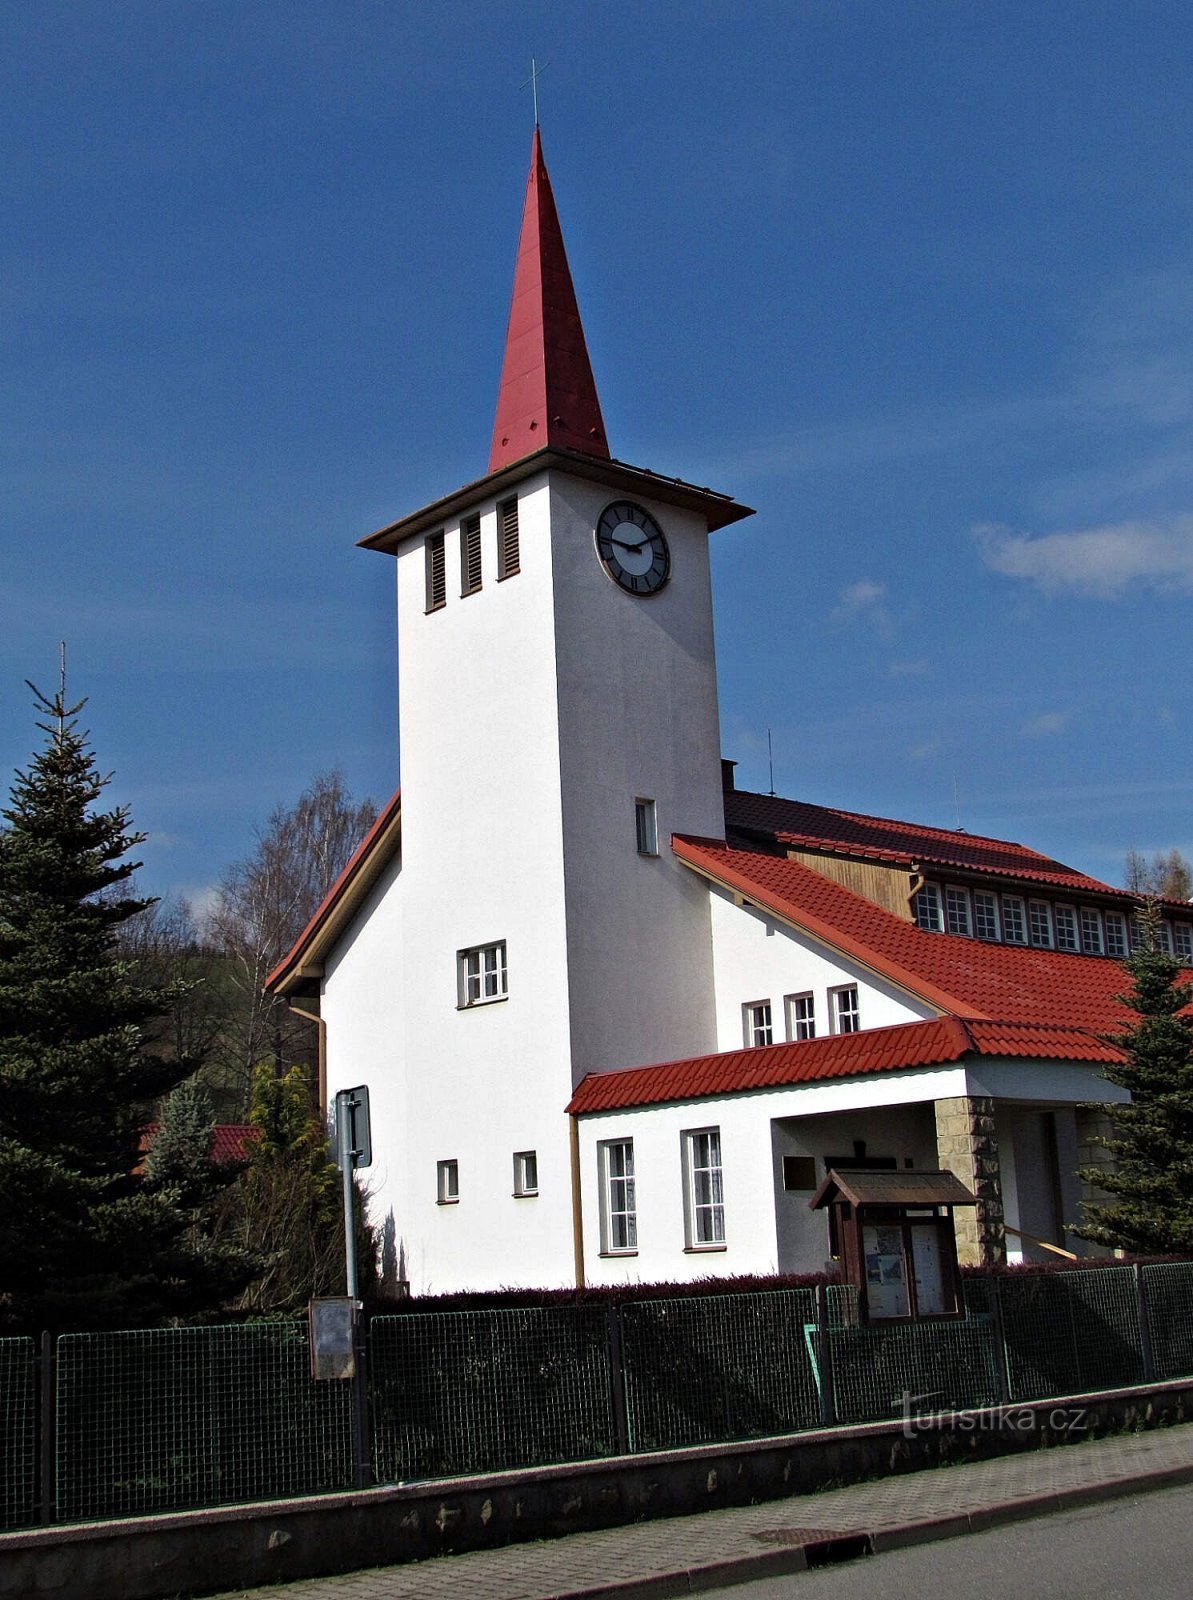 Kateřinice - nhà thờ truyền giáo